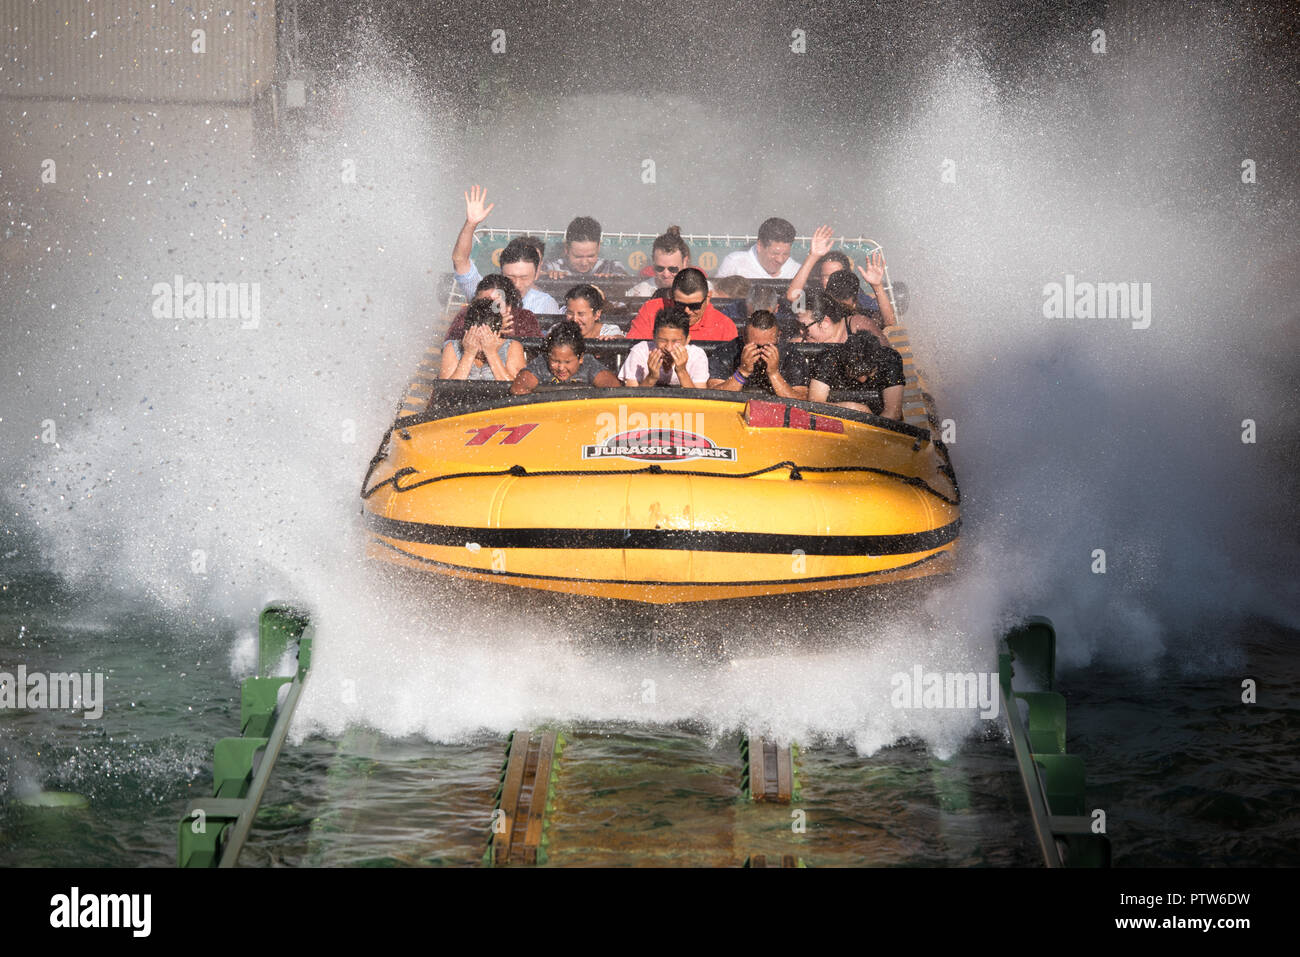 Los Angeles, Kalifornien, USA - 30. Juli 2018: Wasser-basierten Amusement Ride in den Universal Studios Hollywood, Los Angeles, CA. Stockfoto